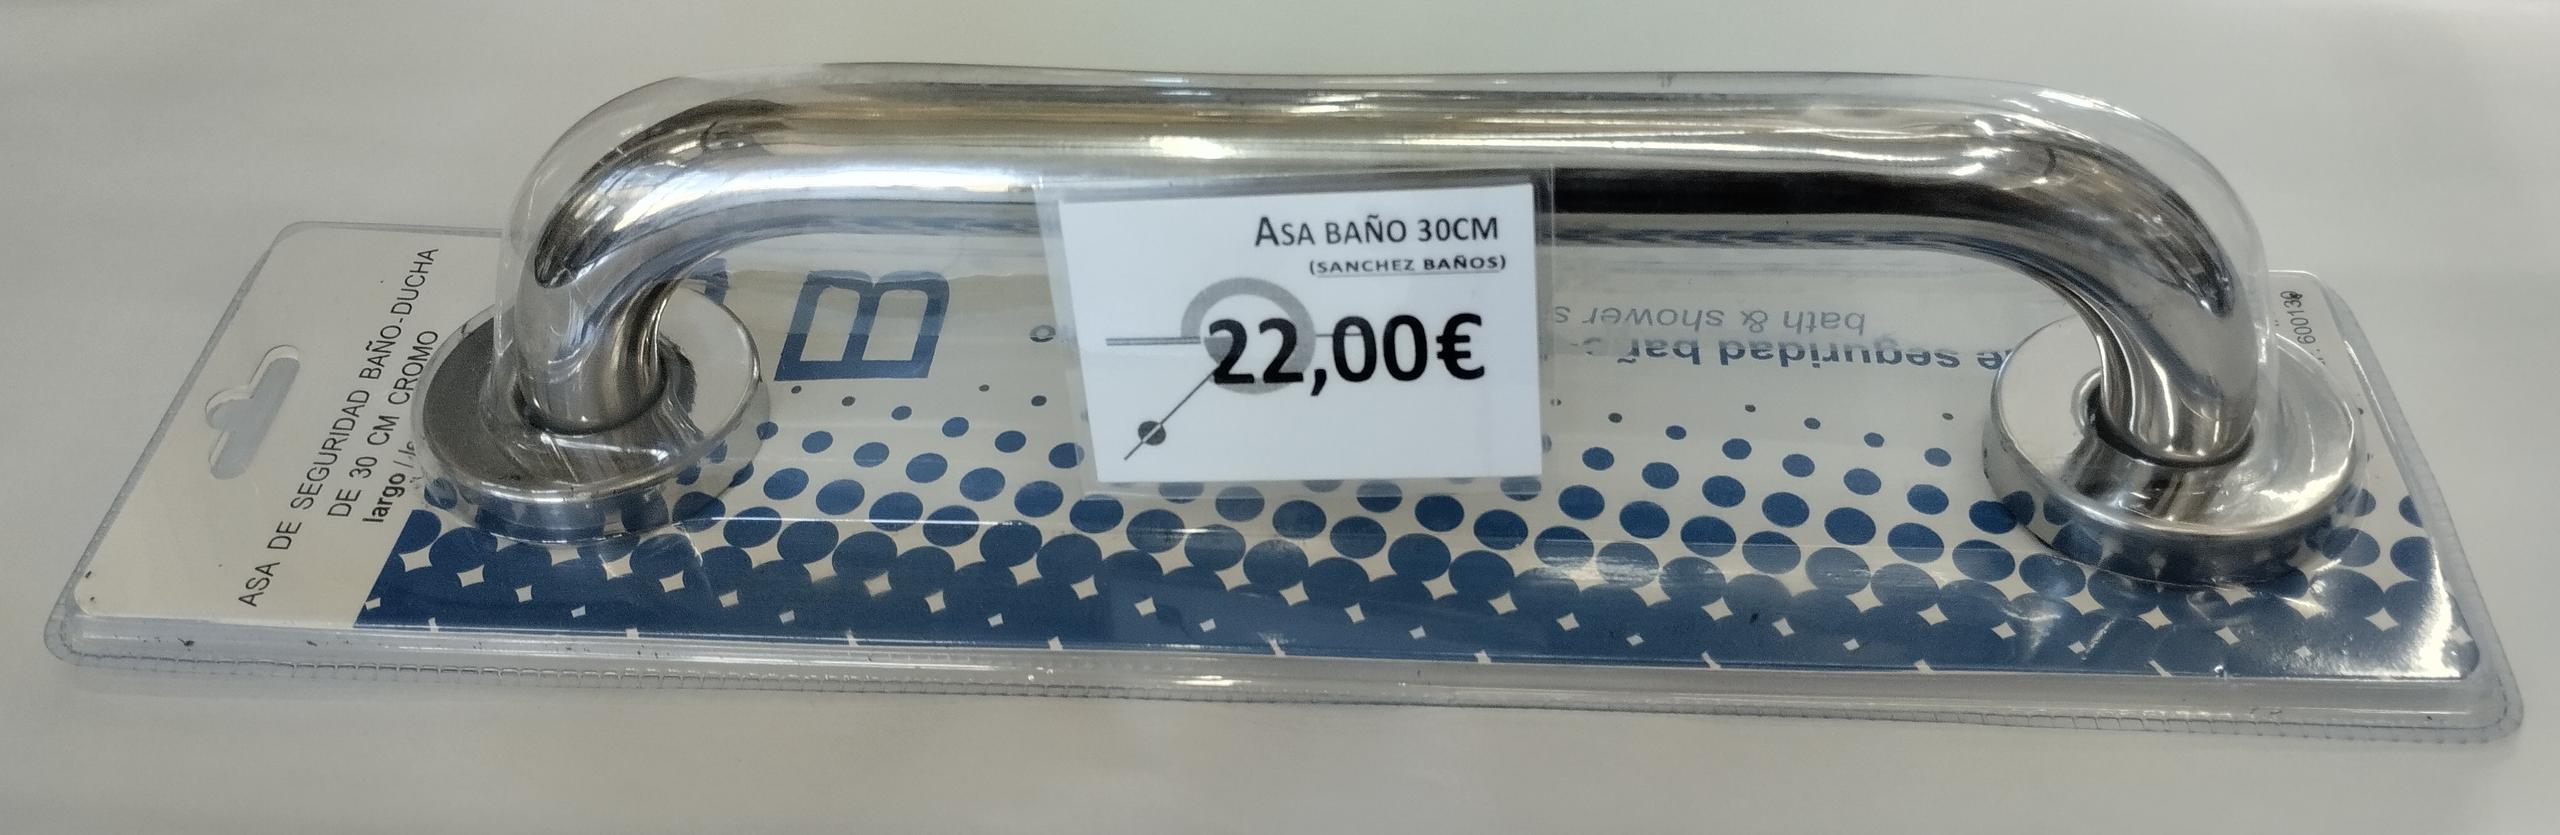 22,00€ (oferta)